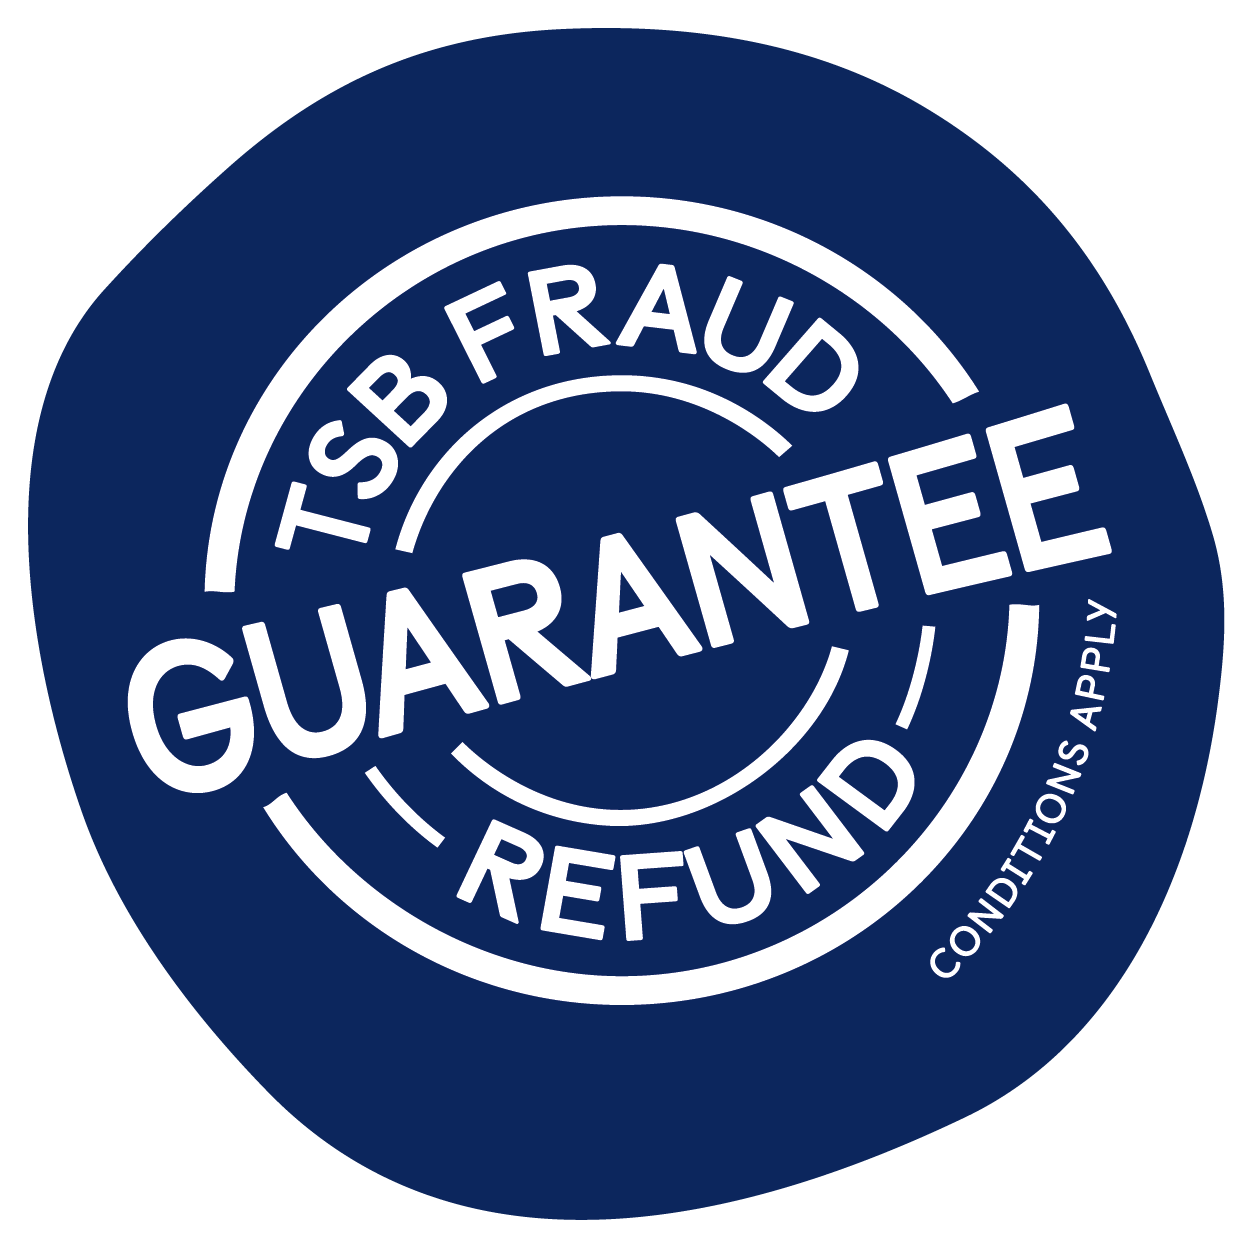 TSB fraud refund guarantee logo 